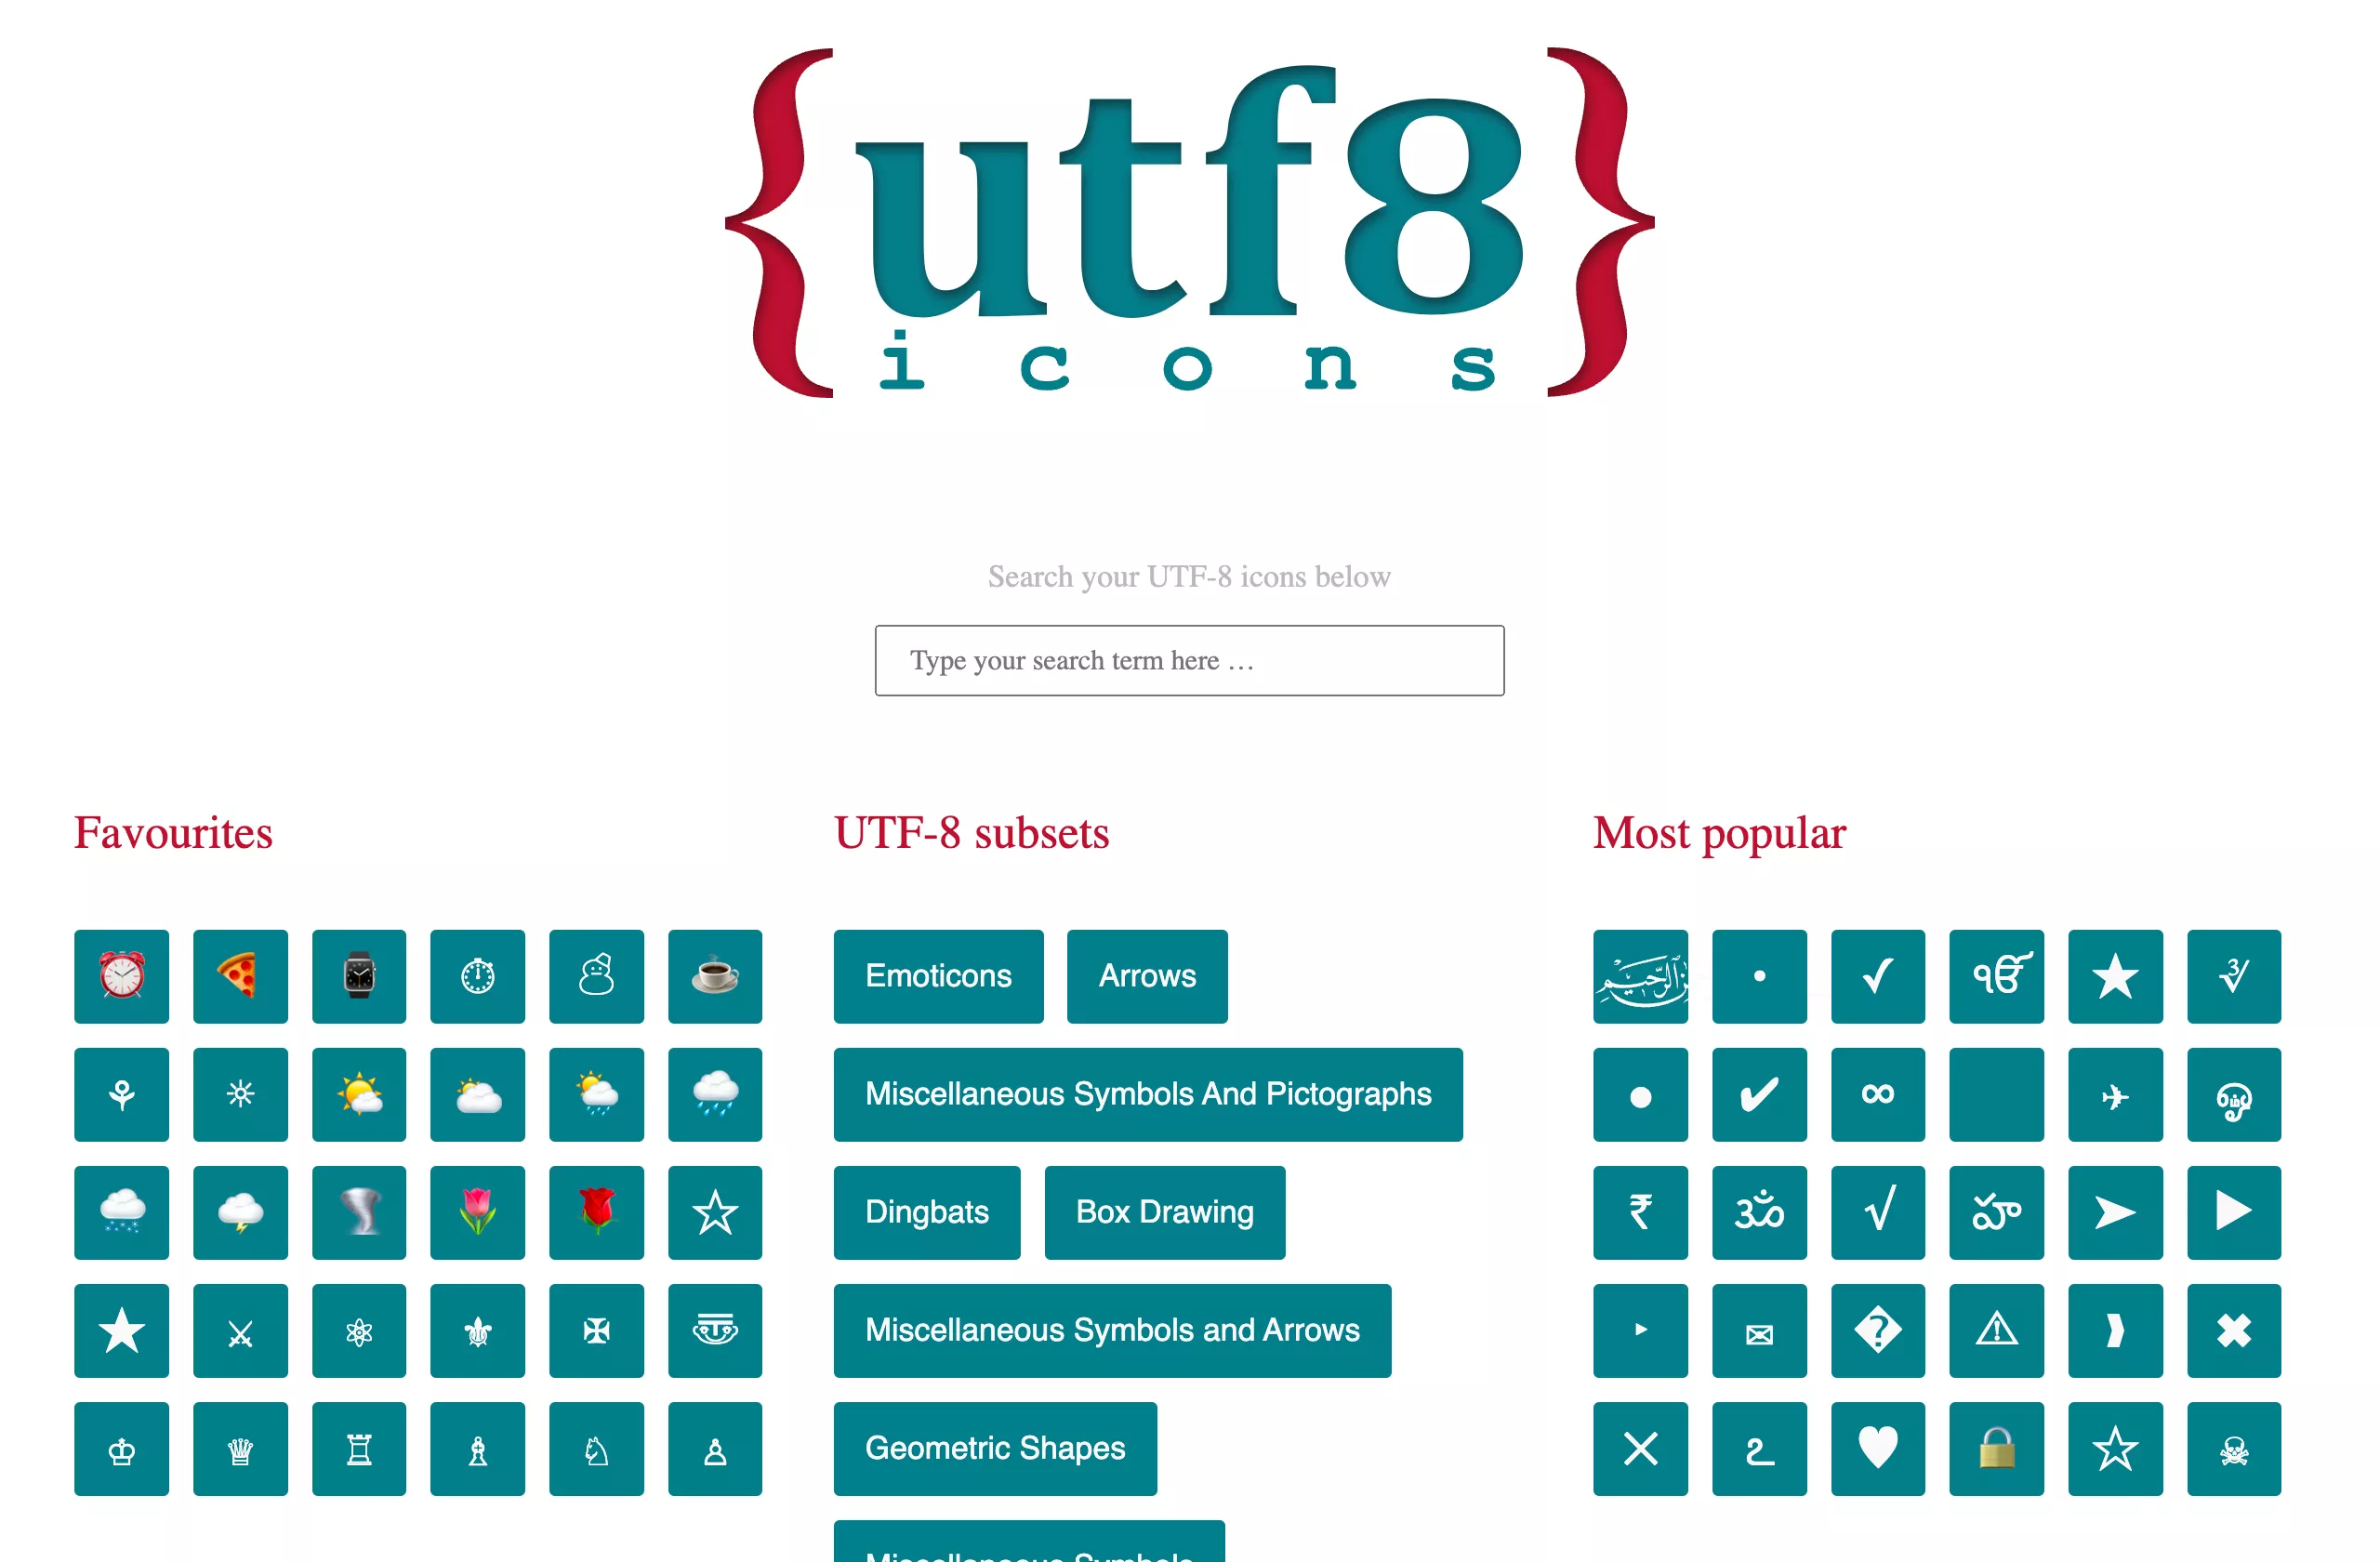 UTF-8 icons